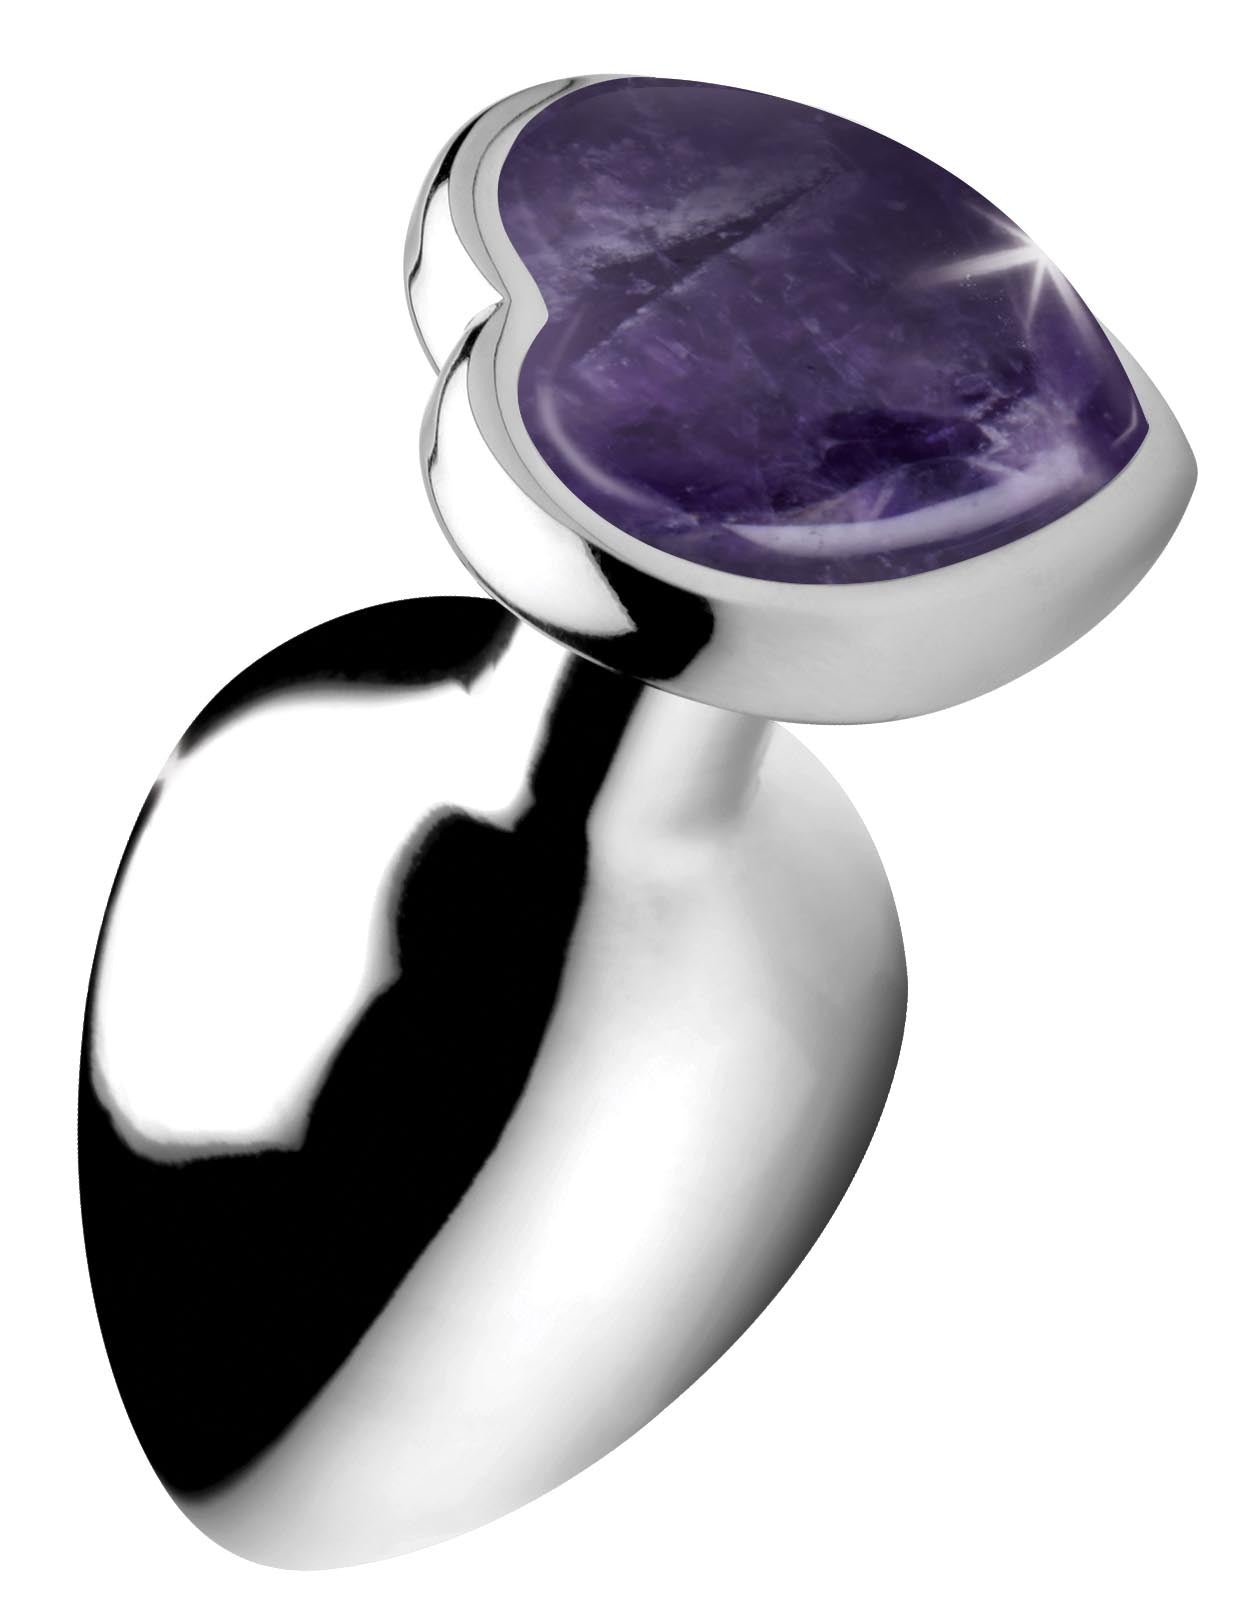 Genuine Amethyst Gemstone Heart Anal Plug - Large 
Anal Toys
Booty Sparks Cupid’s Secret Stash